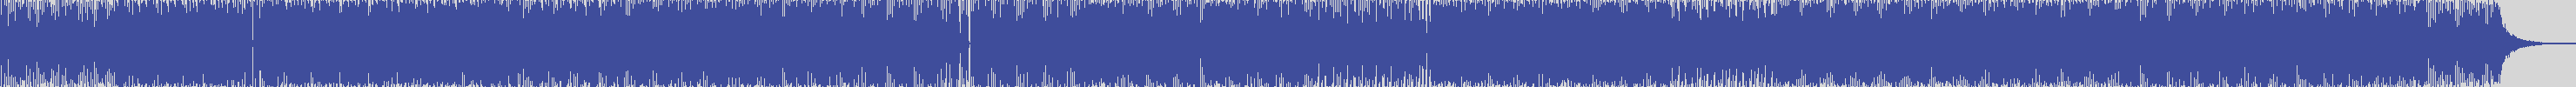 vitti_records [VIT010] Ratek - June Vi [Original Mix] audio wave form